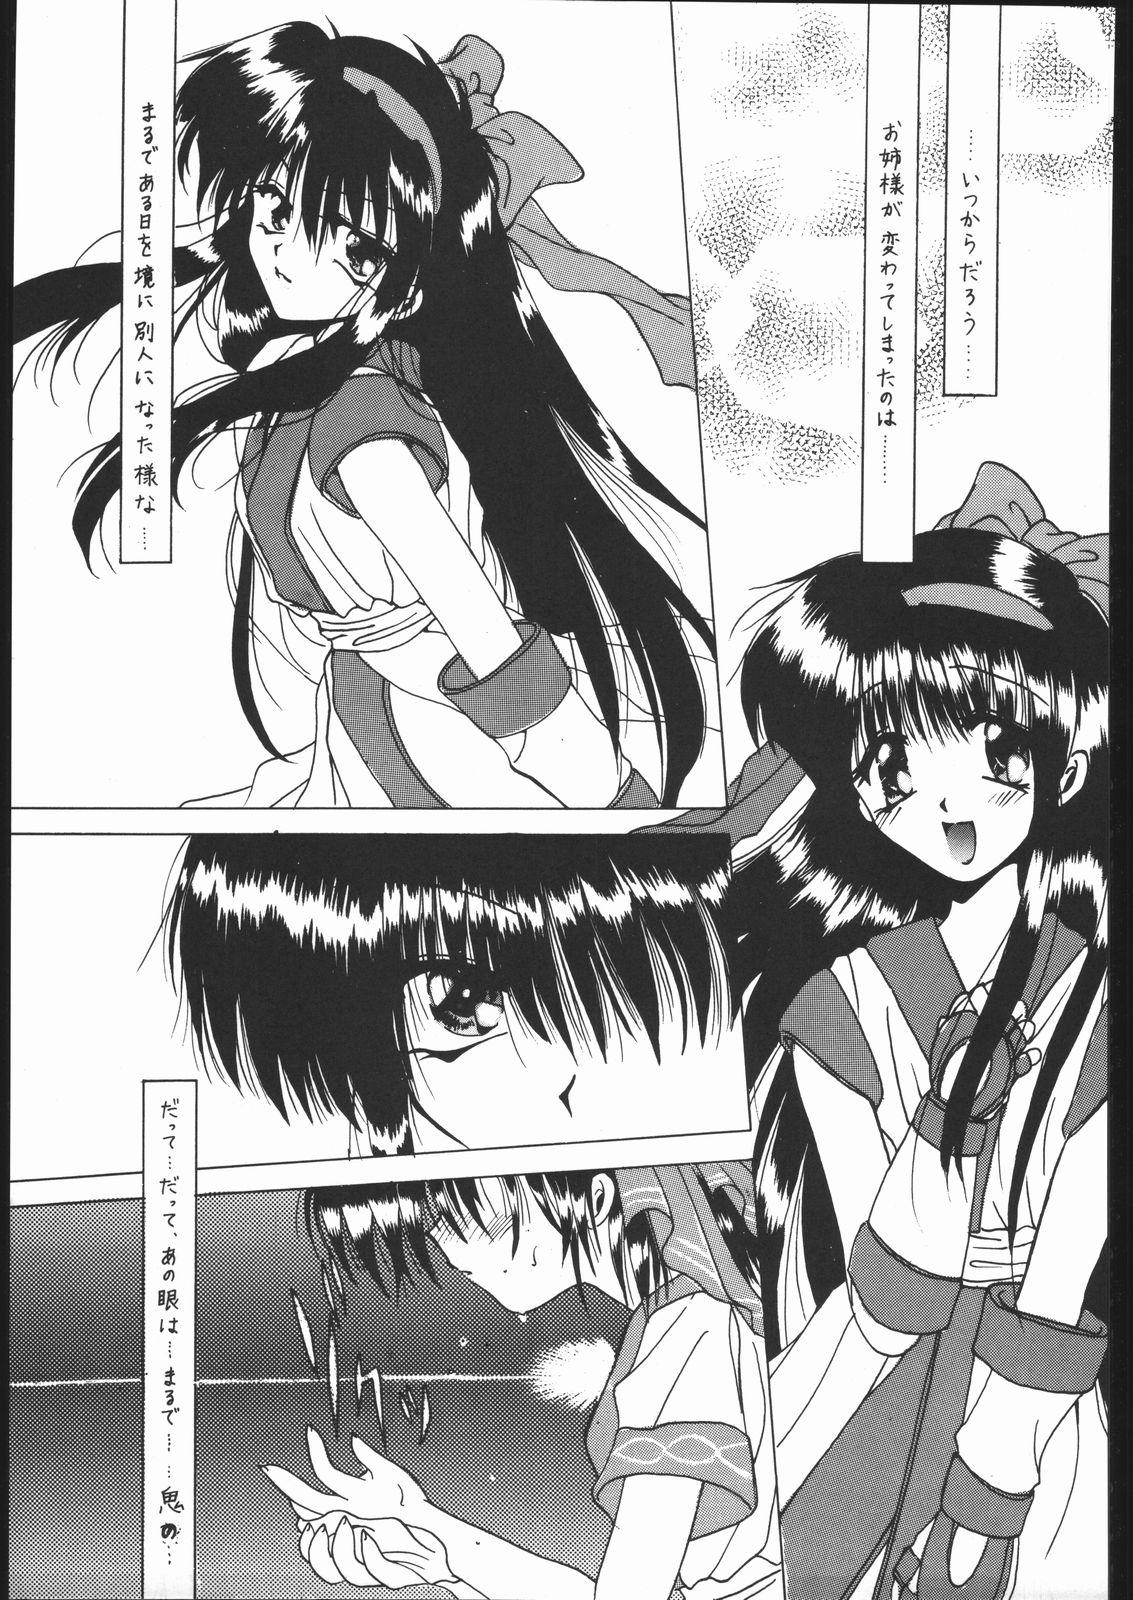 Ass Worship Honkan ha na mura beni suzaku no ma - Samurai spirits Lesbian - Page 3